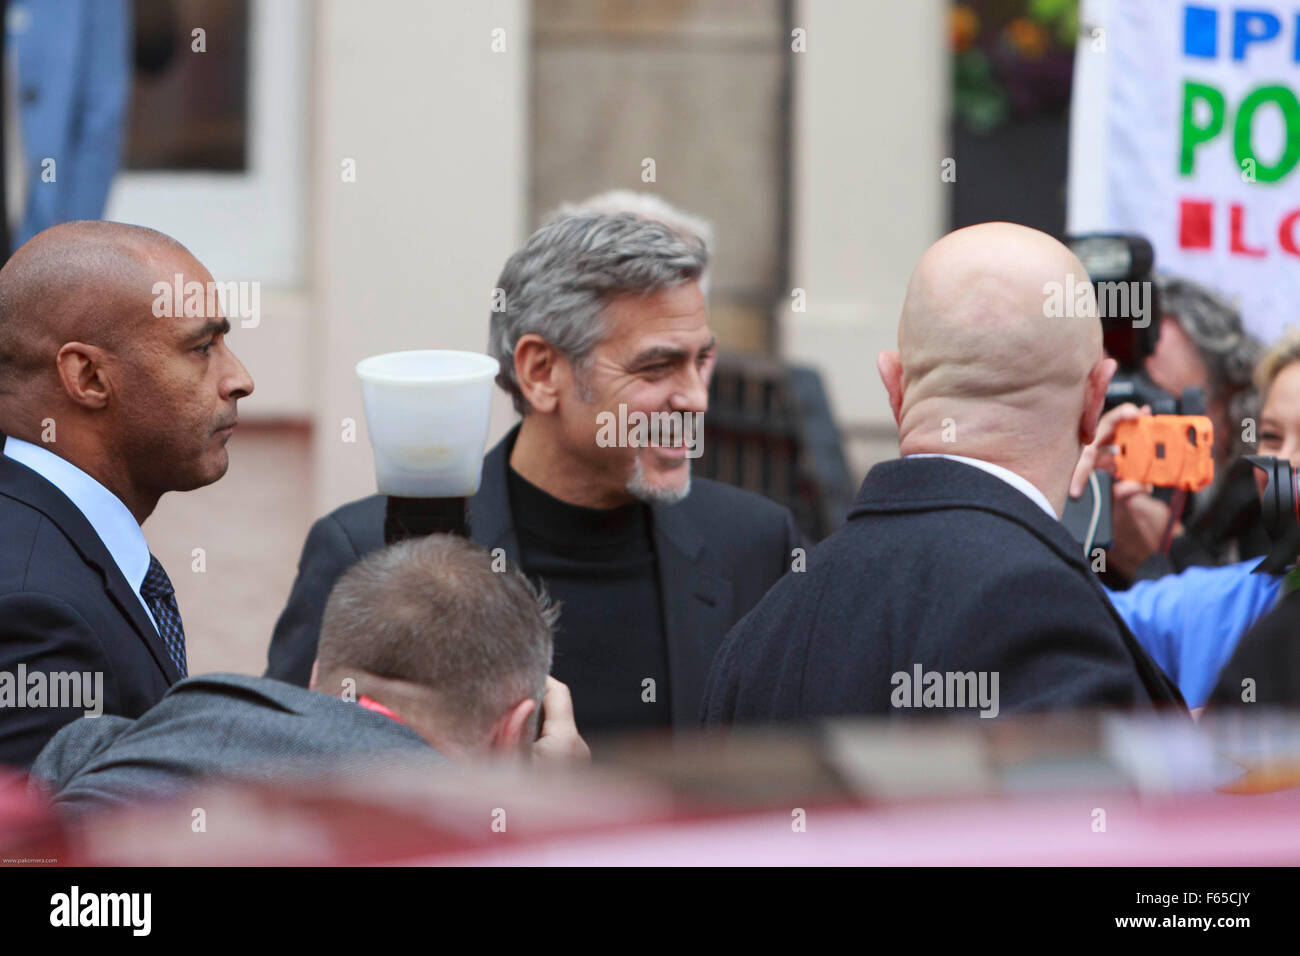 Edinburgh, UK. 12 November. George Clooney in Edinburgh zu sehen. Abgebildete George ClooneyPako Mera/Alamy Live-Nachrichten. Stockfoto